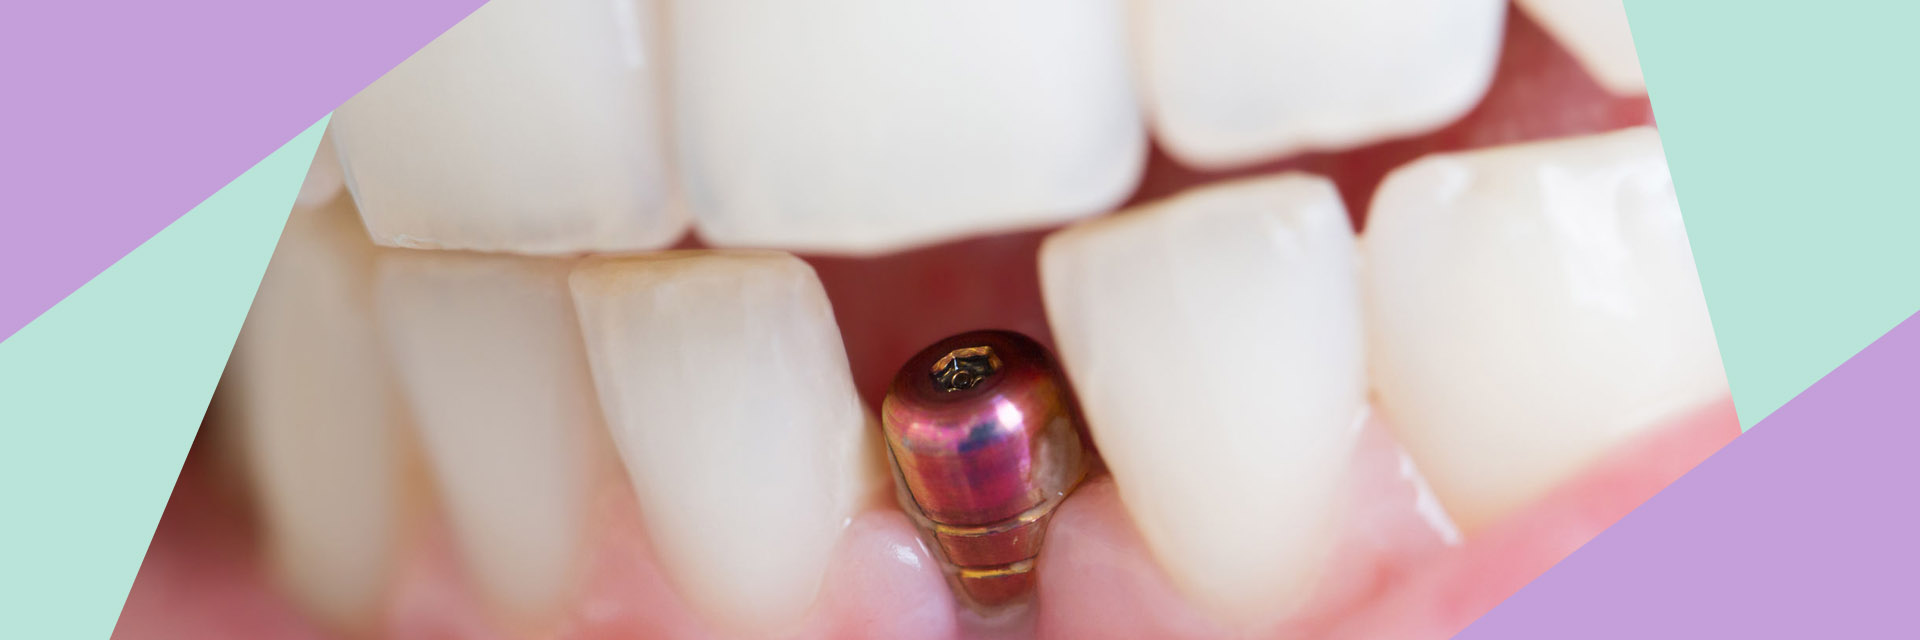 queensboro-dental-implants-dental-implant-Slider-01_02